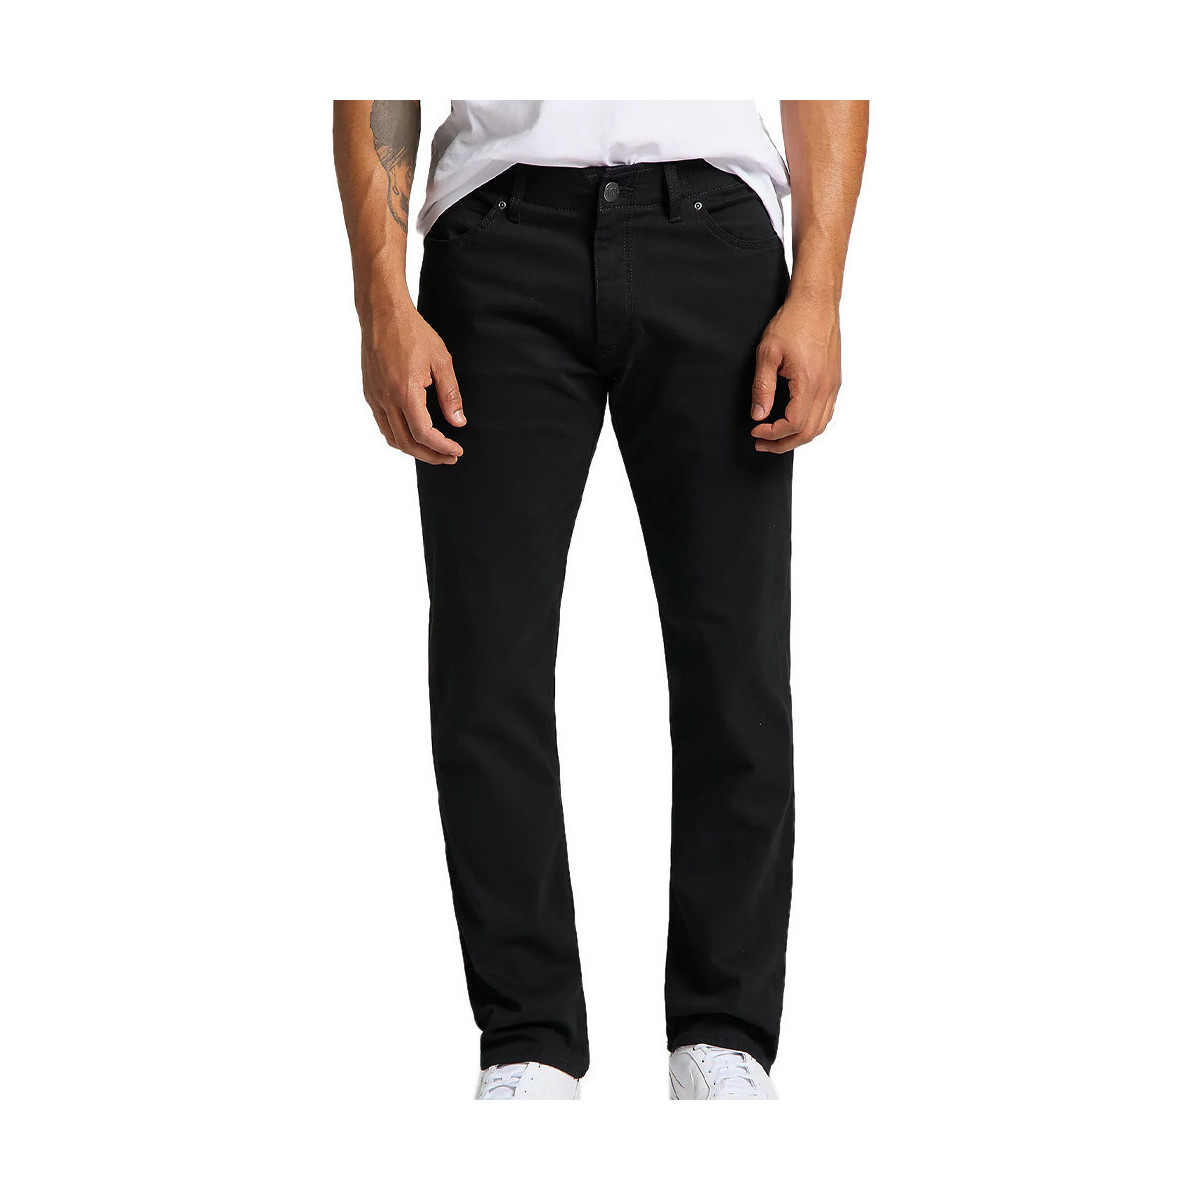 Textiel Heren Straight jeans Lee  Zwart